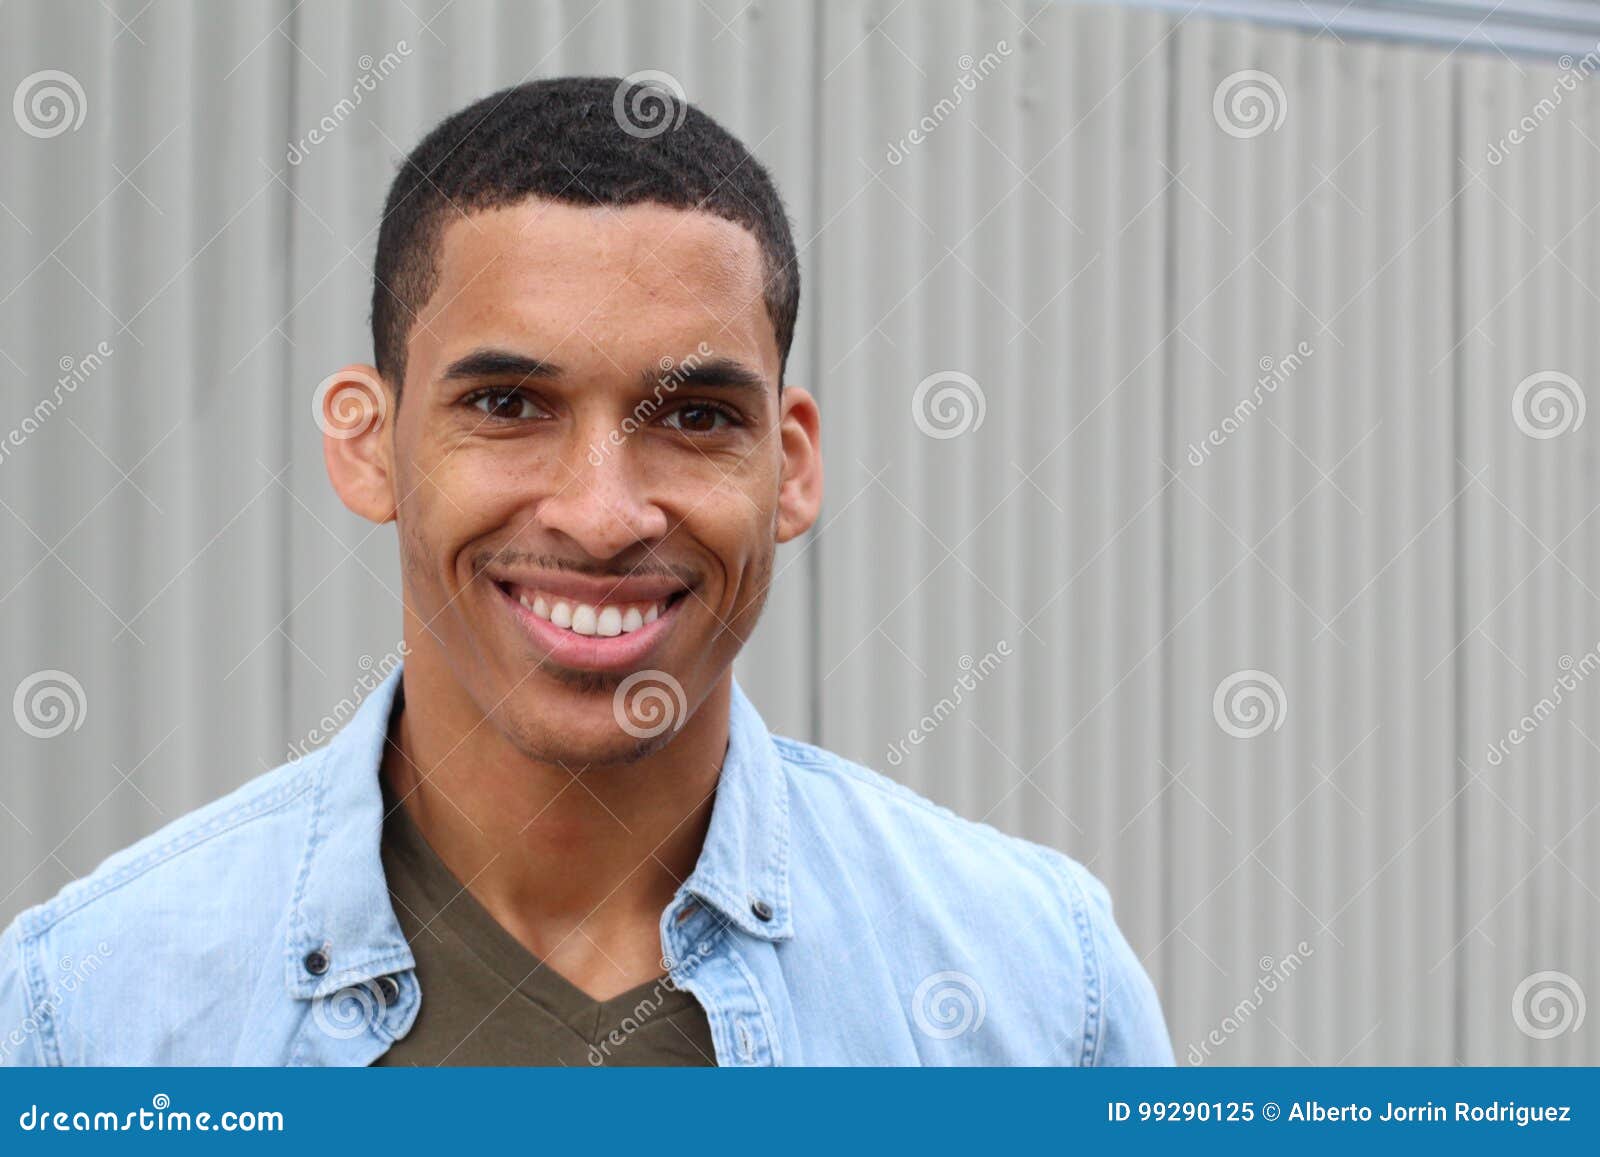 happy-mixed-race-male-smiling-portrait-copy-space-happy-mixed-race-male-smiling-portrait-copy-space-99290125.jpg